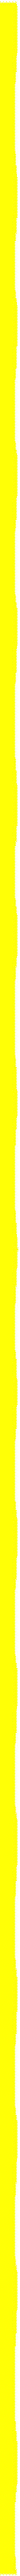 yellow boarder